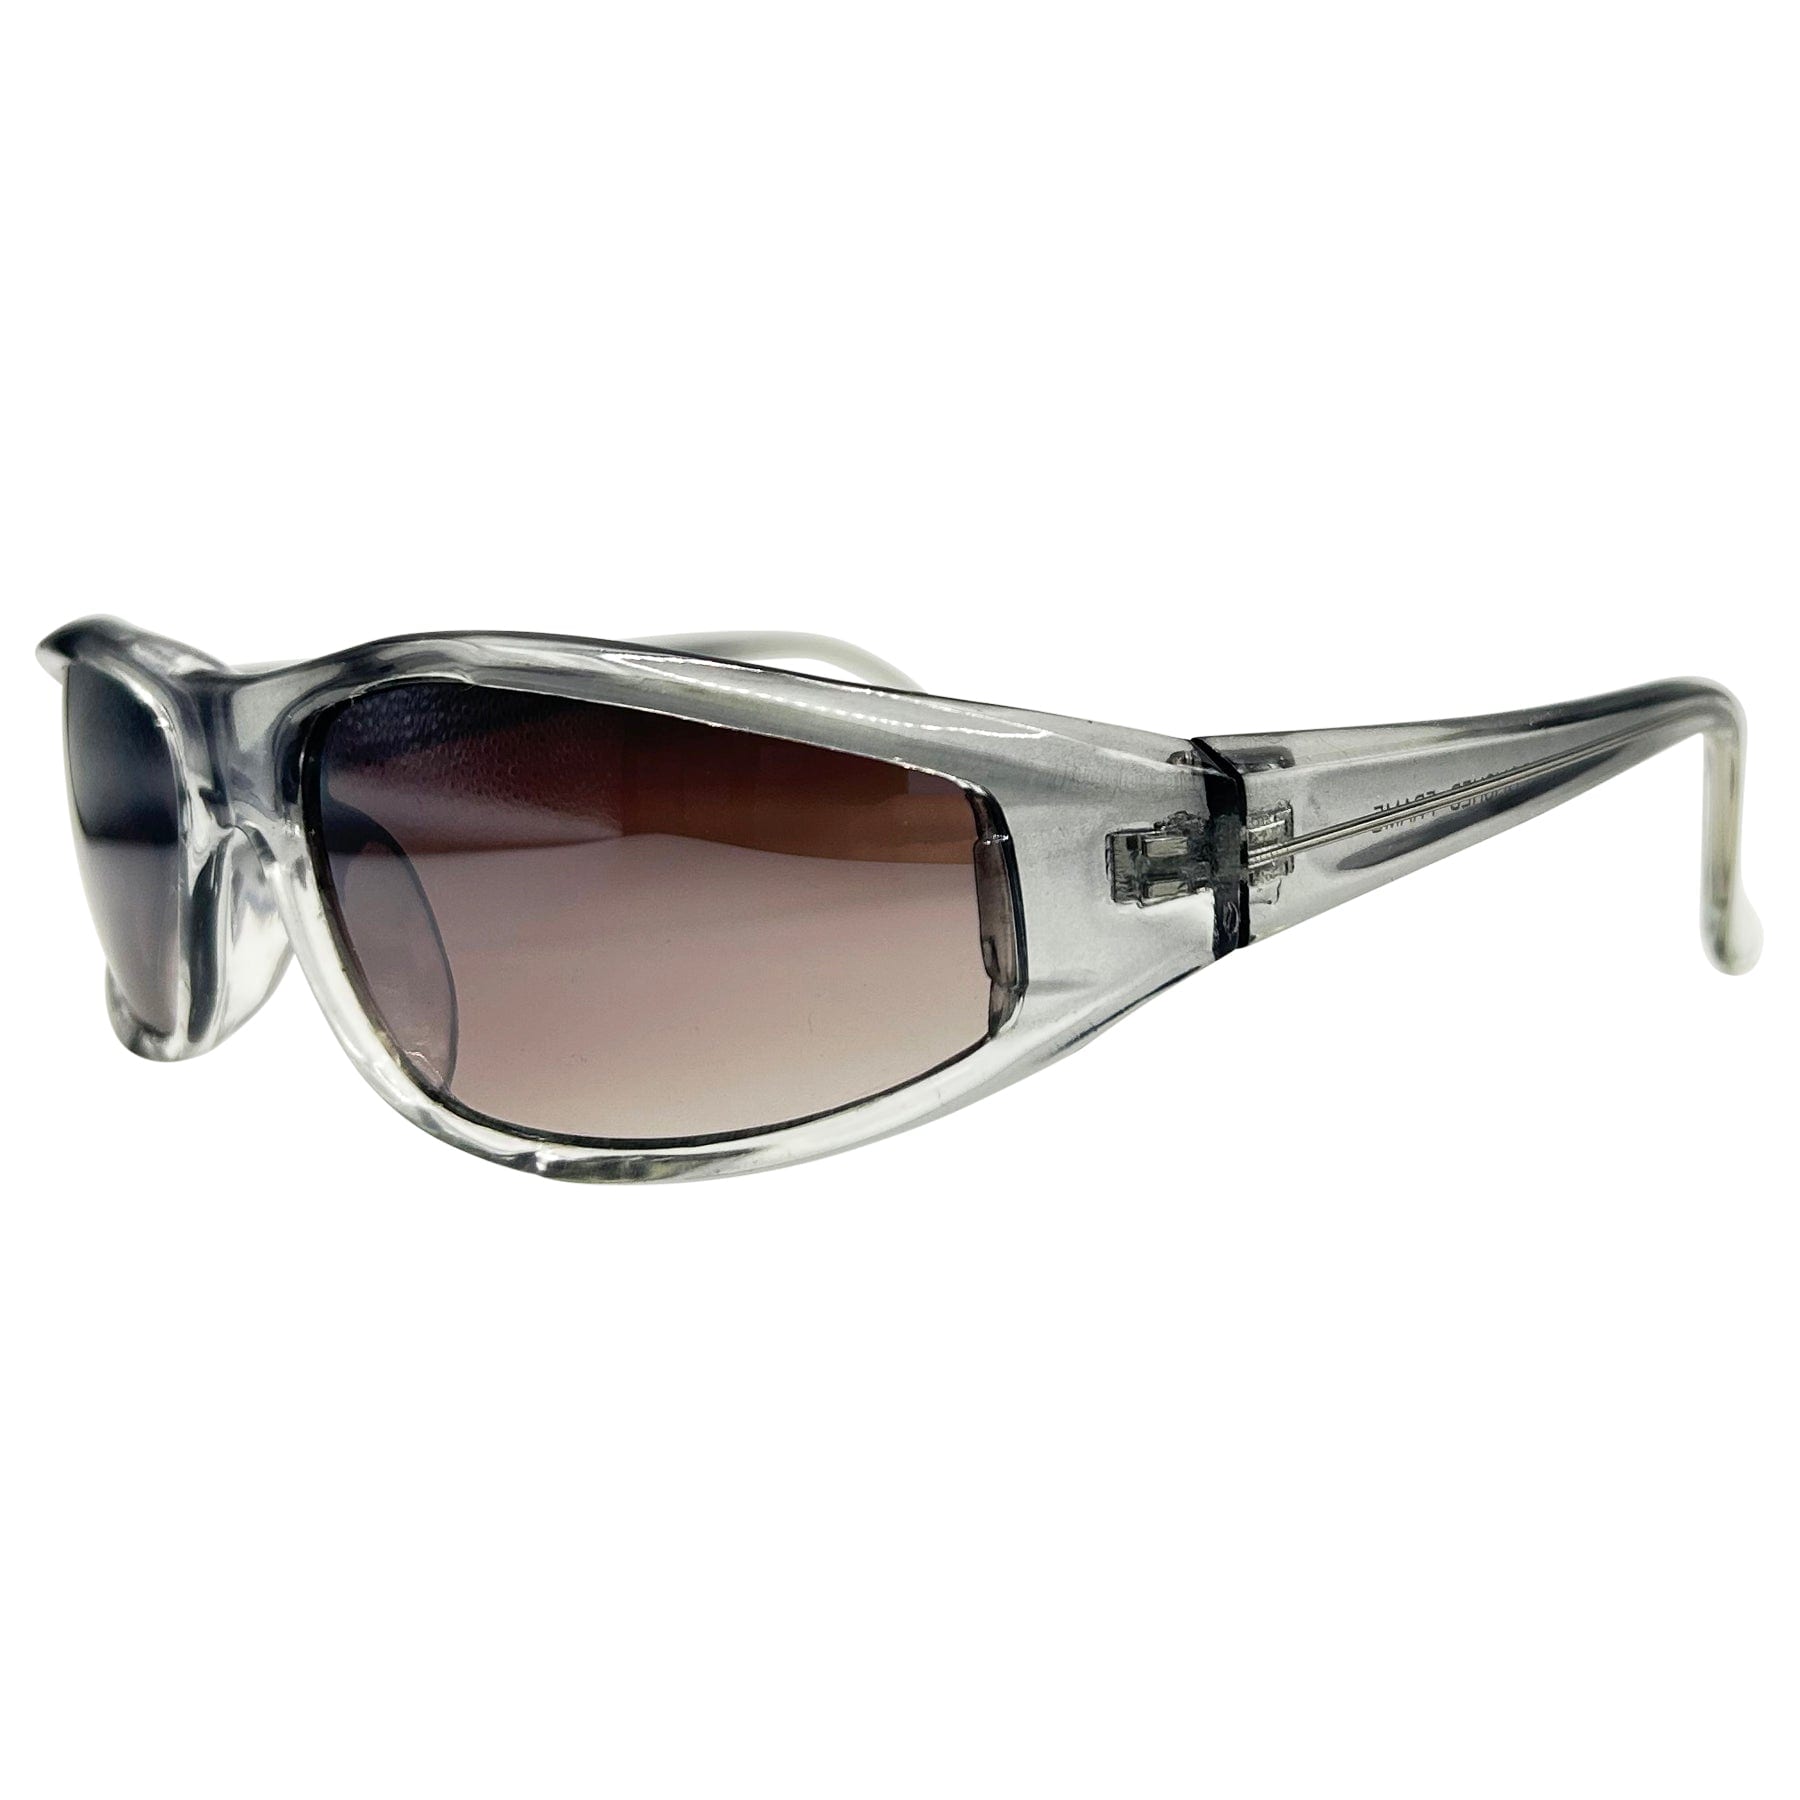 90s sporty vintage sunglasses with a wraparound frame